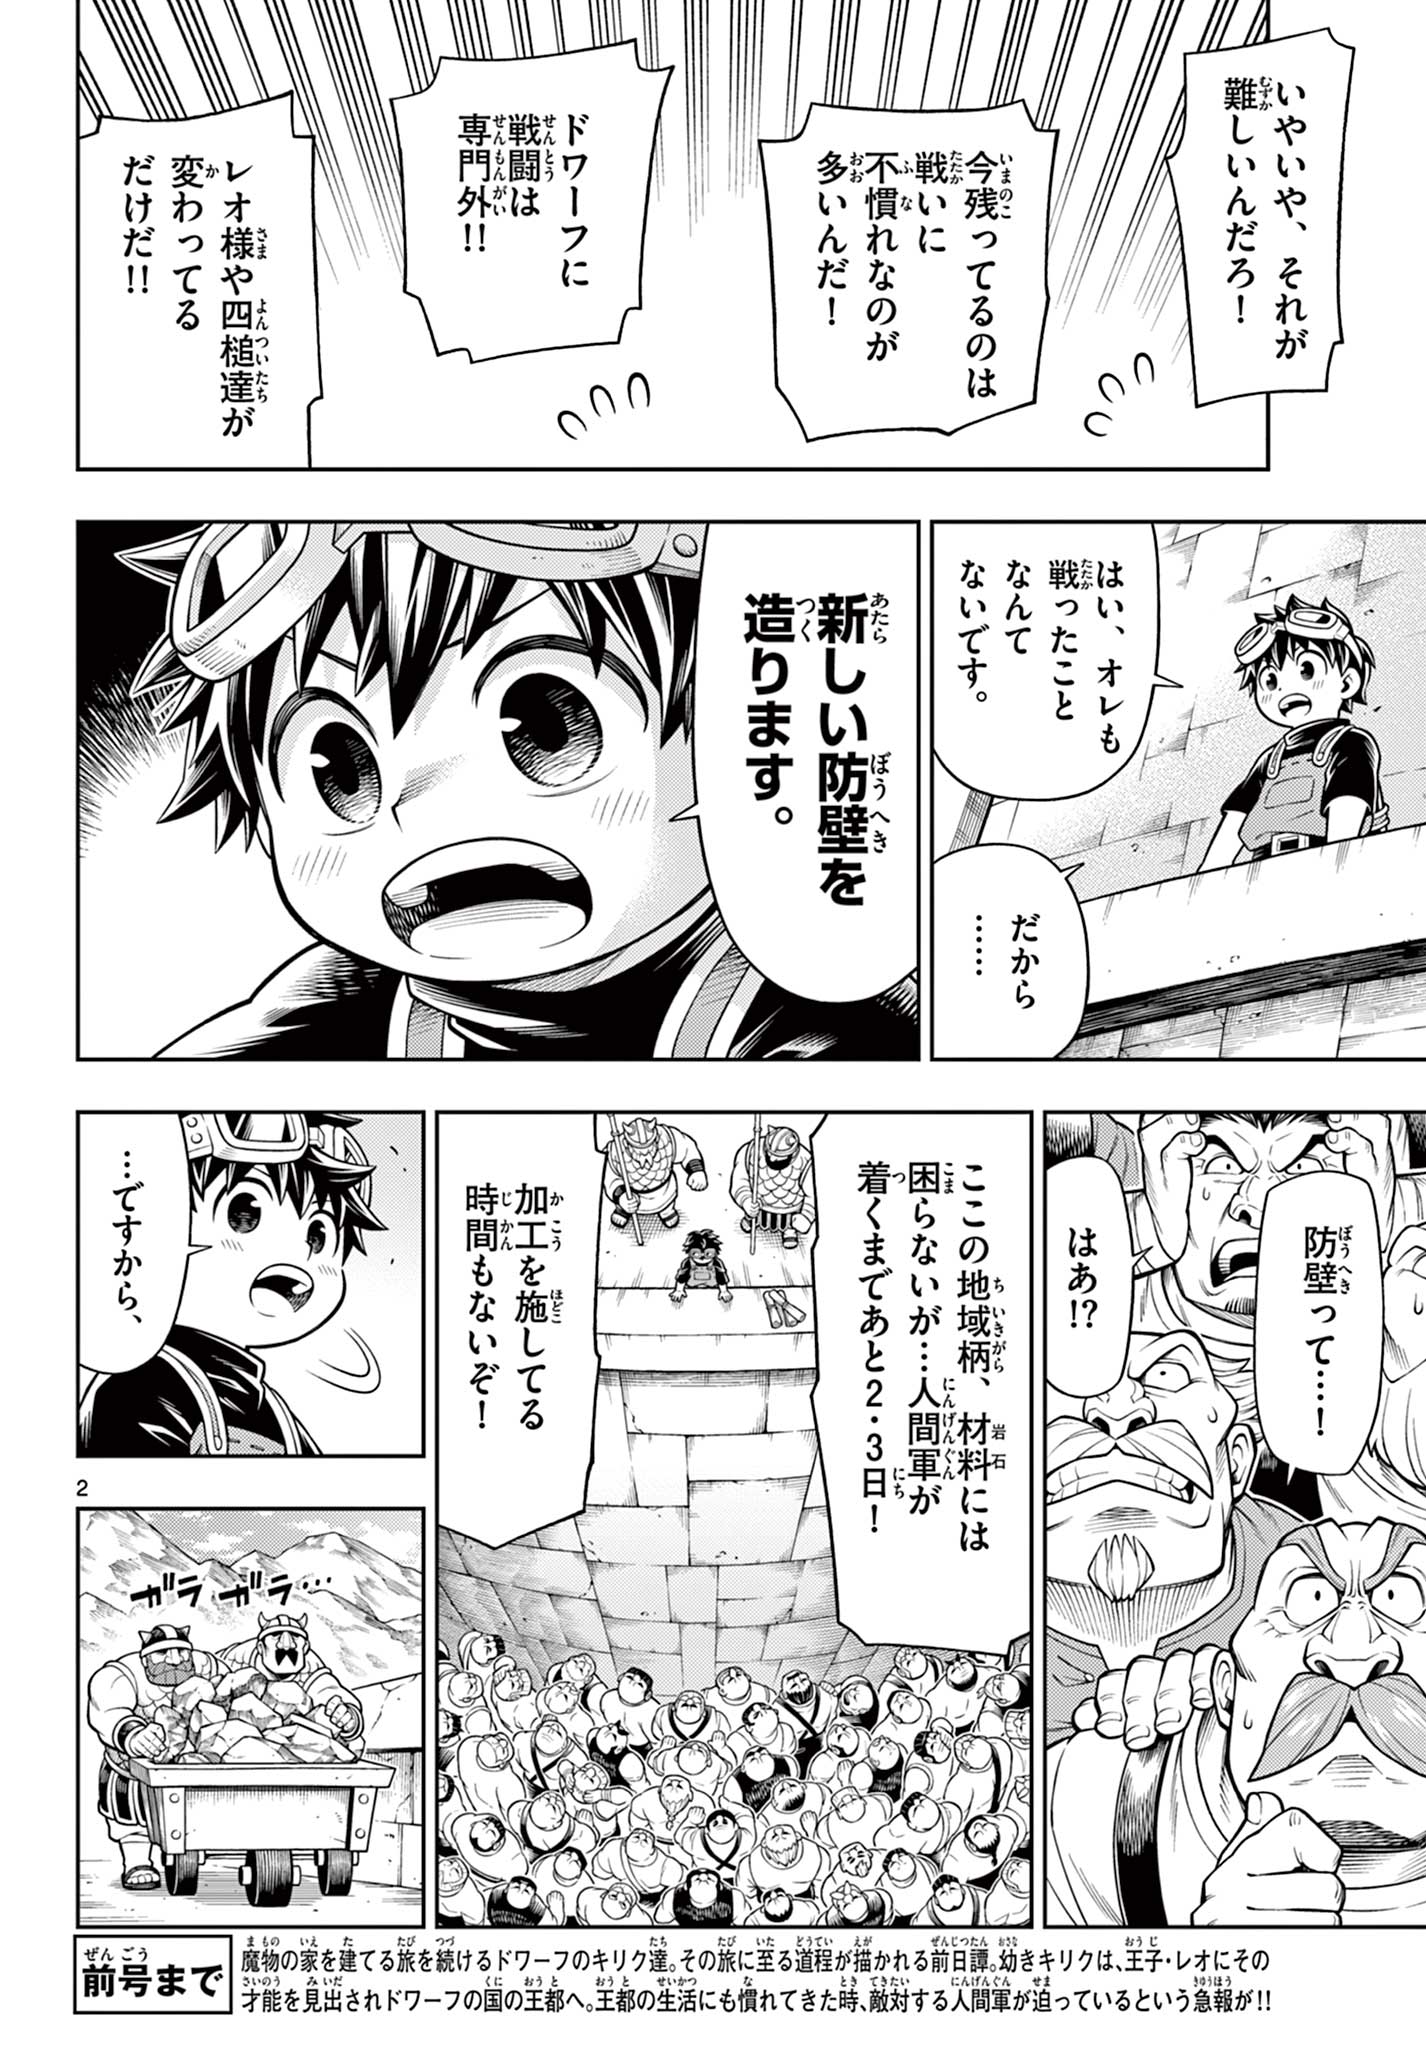 Soara to Mamono no ie - Chapter 27 - Page 2